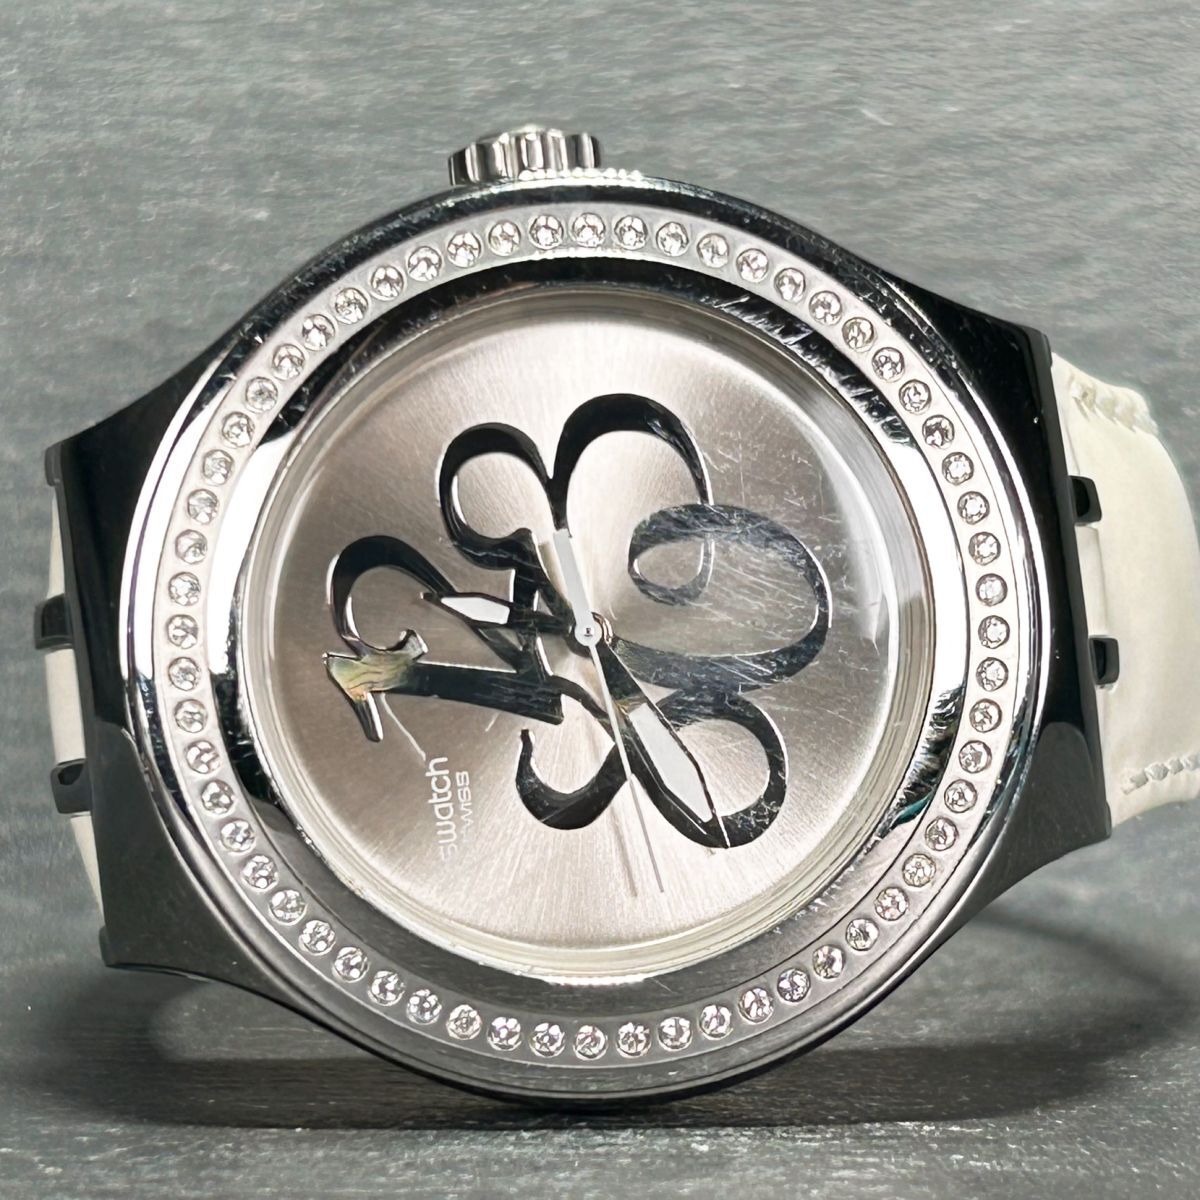 SWATCH Swatch IRONY Irony NABAB YNS107 наручные часы кварц аналог нержавеющая сталь серебряный циферблат мужской новый товар батарейка заменена 